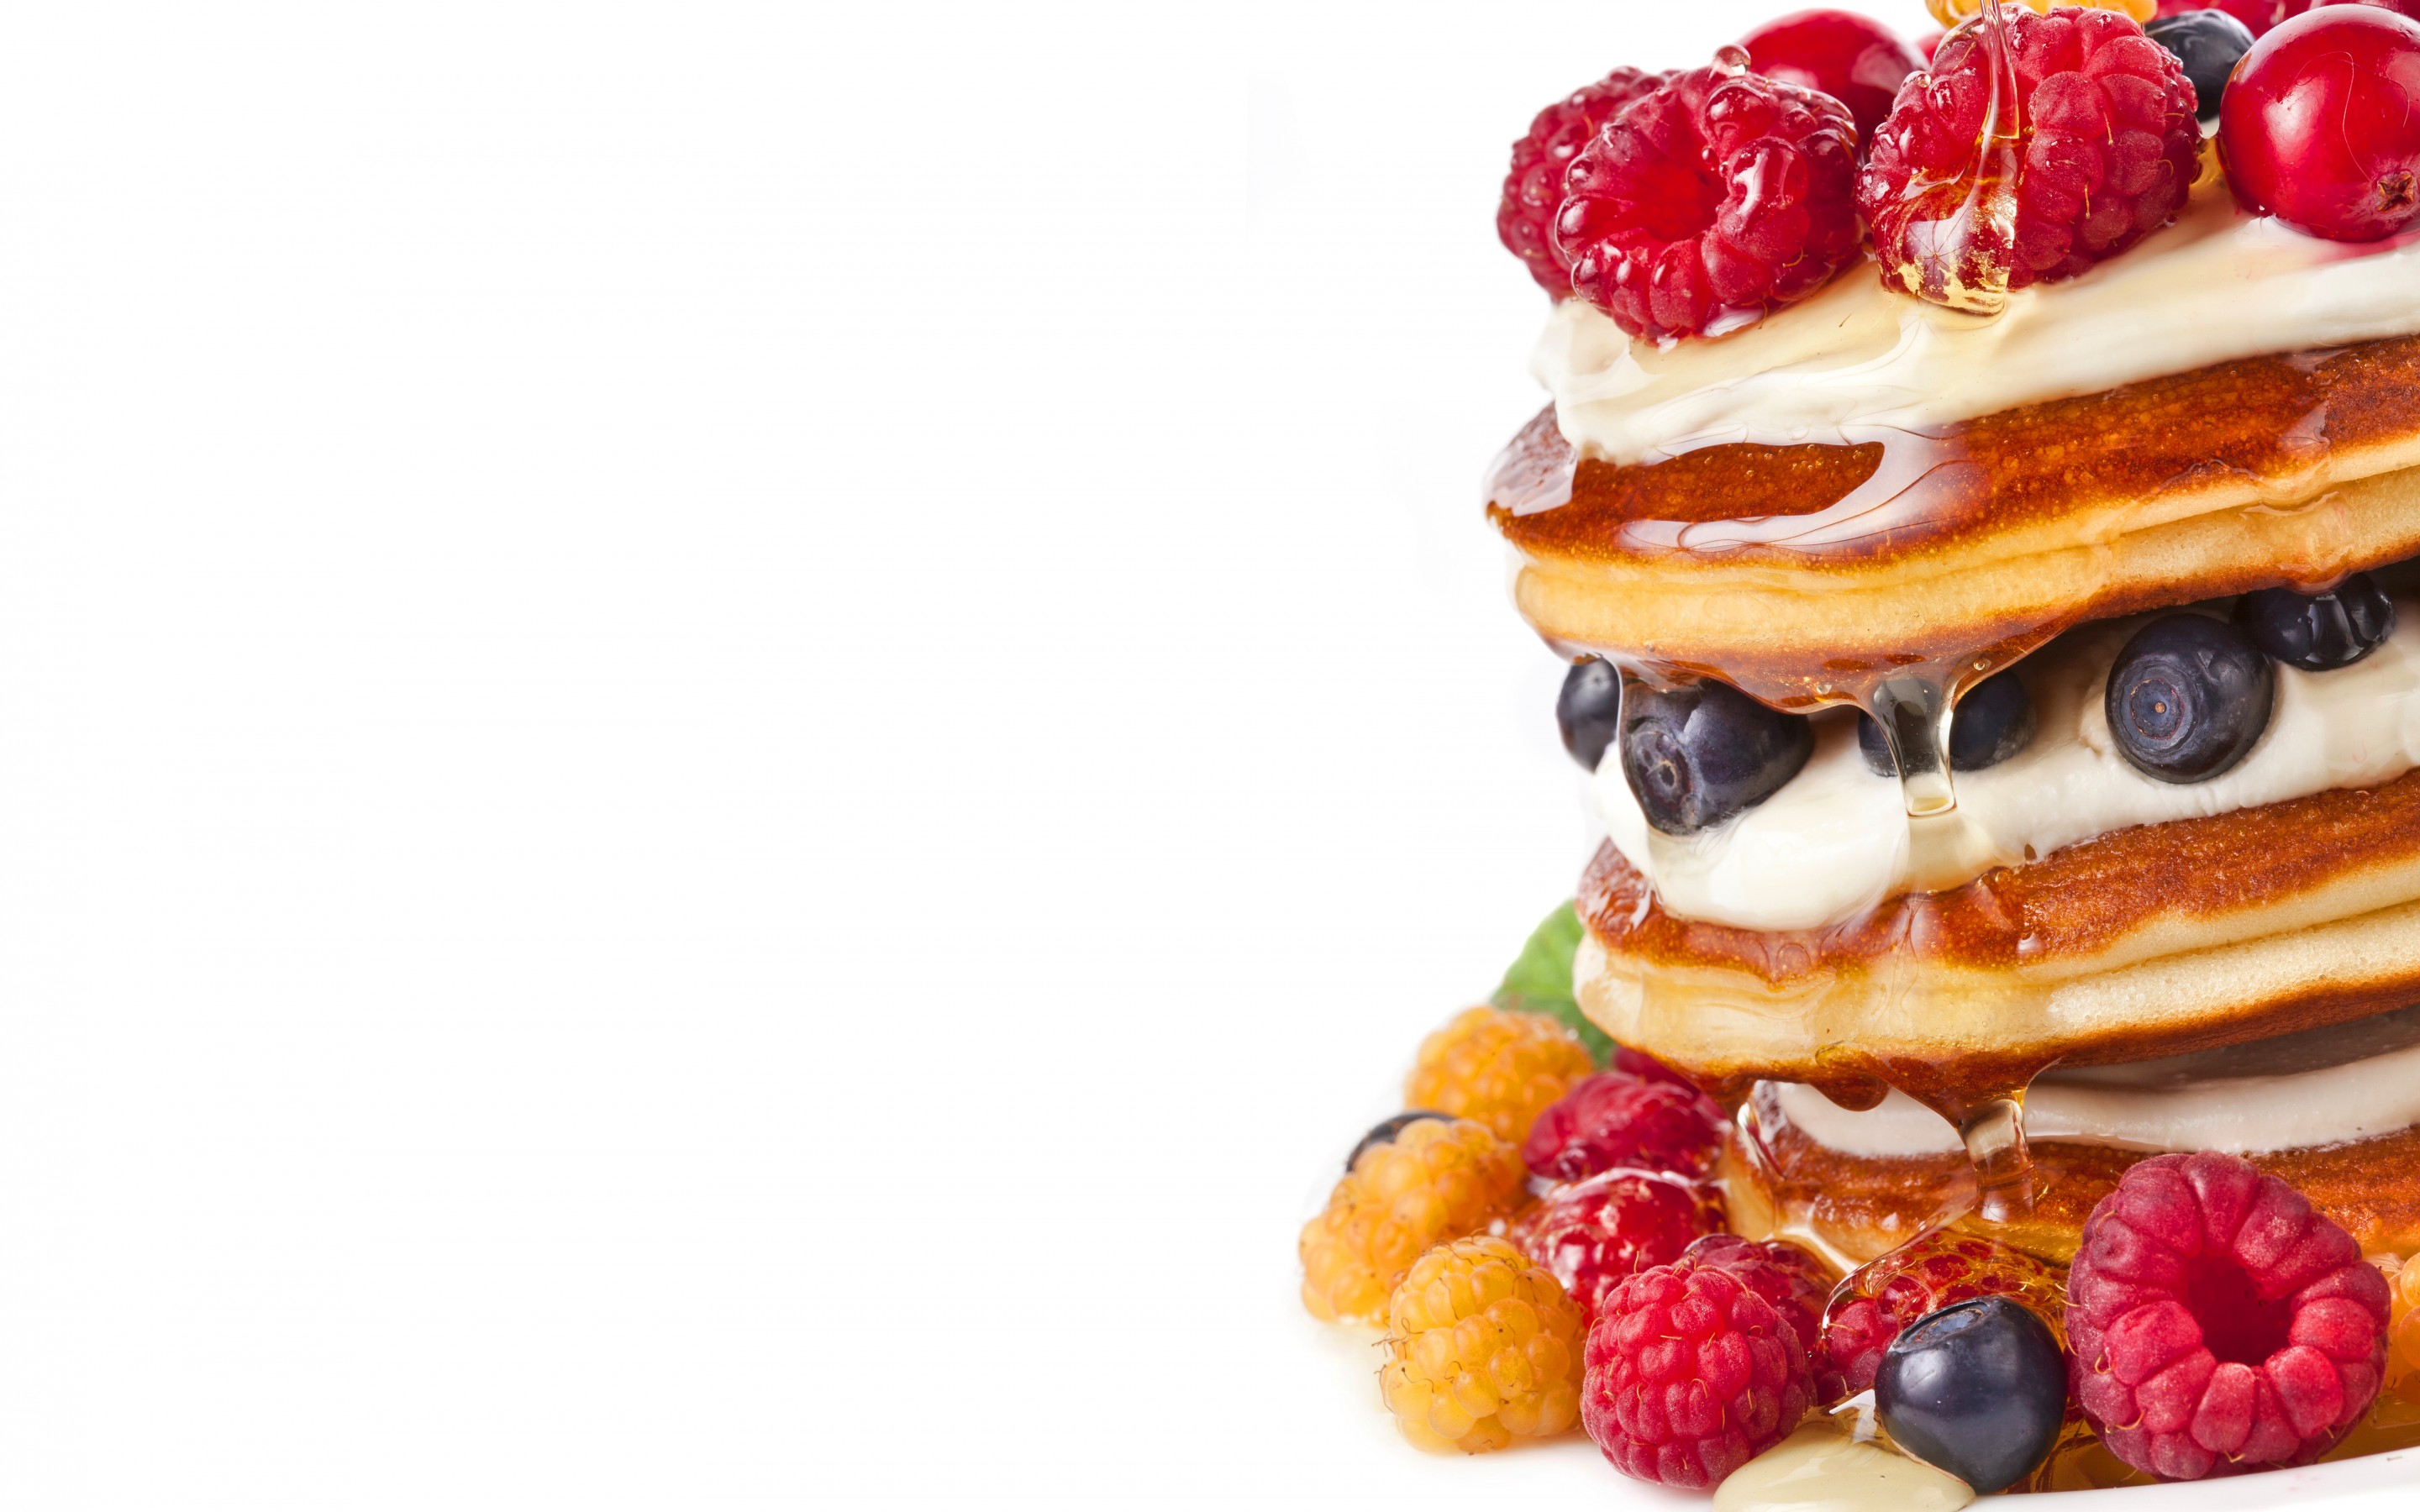 General 2880x1800 pancakes syrup raspberries blueberries sweets white background food fruit berries closeup